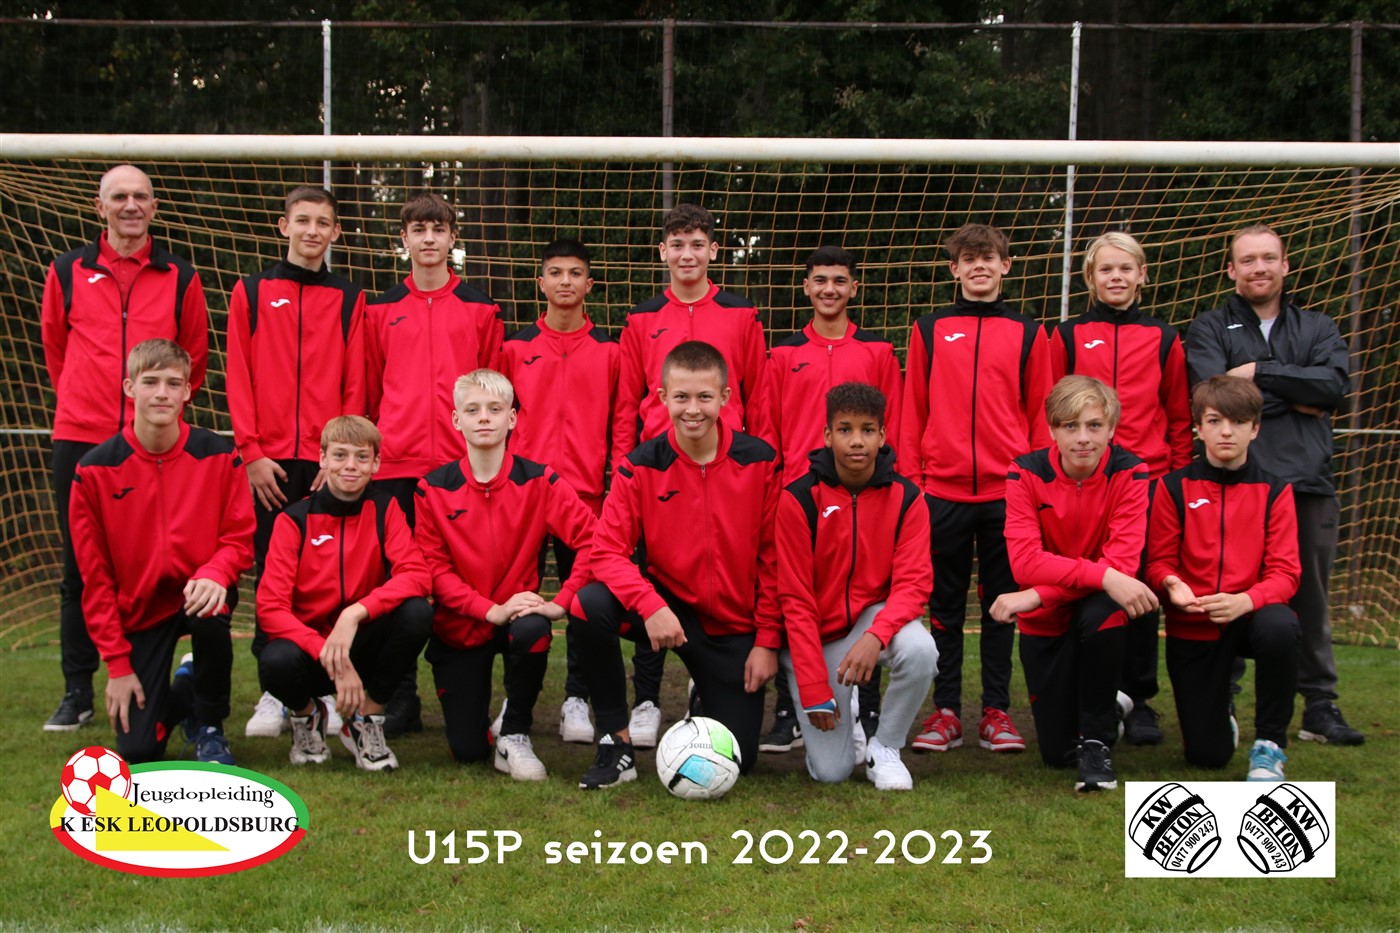 U15P ploegfoto jeugdopleiding voetbalclub K.ESK Leopoldsburg